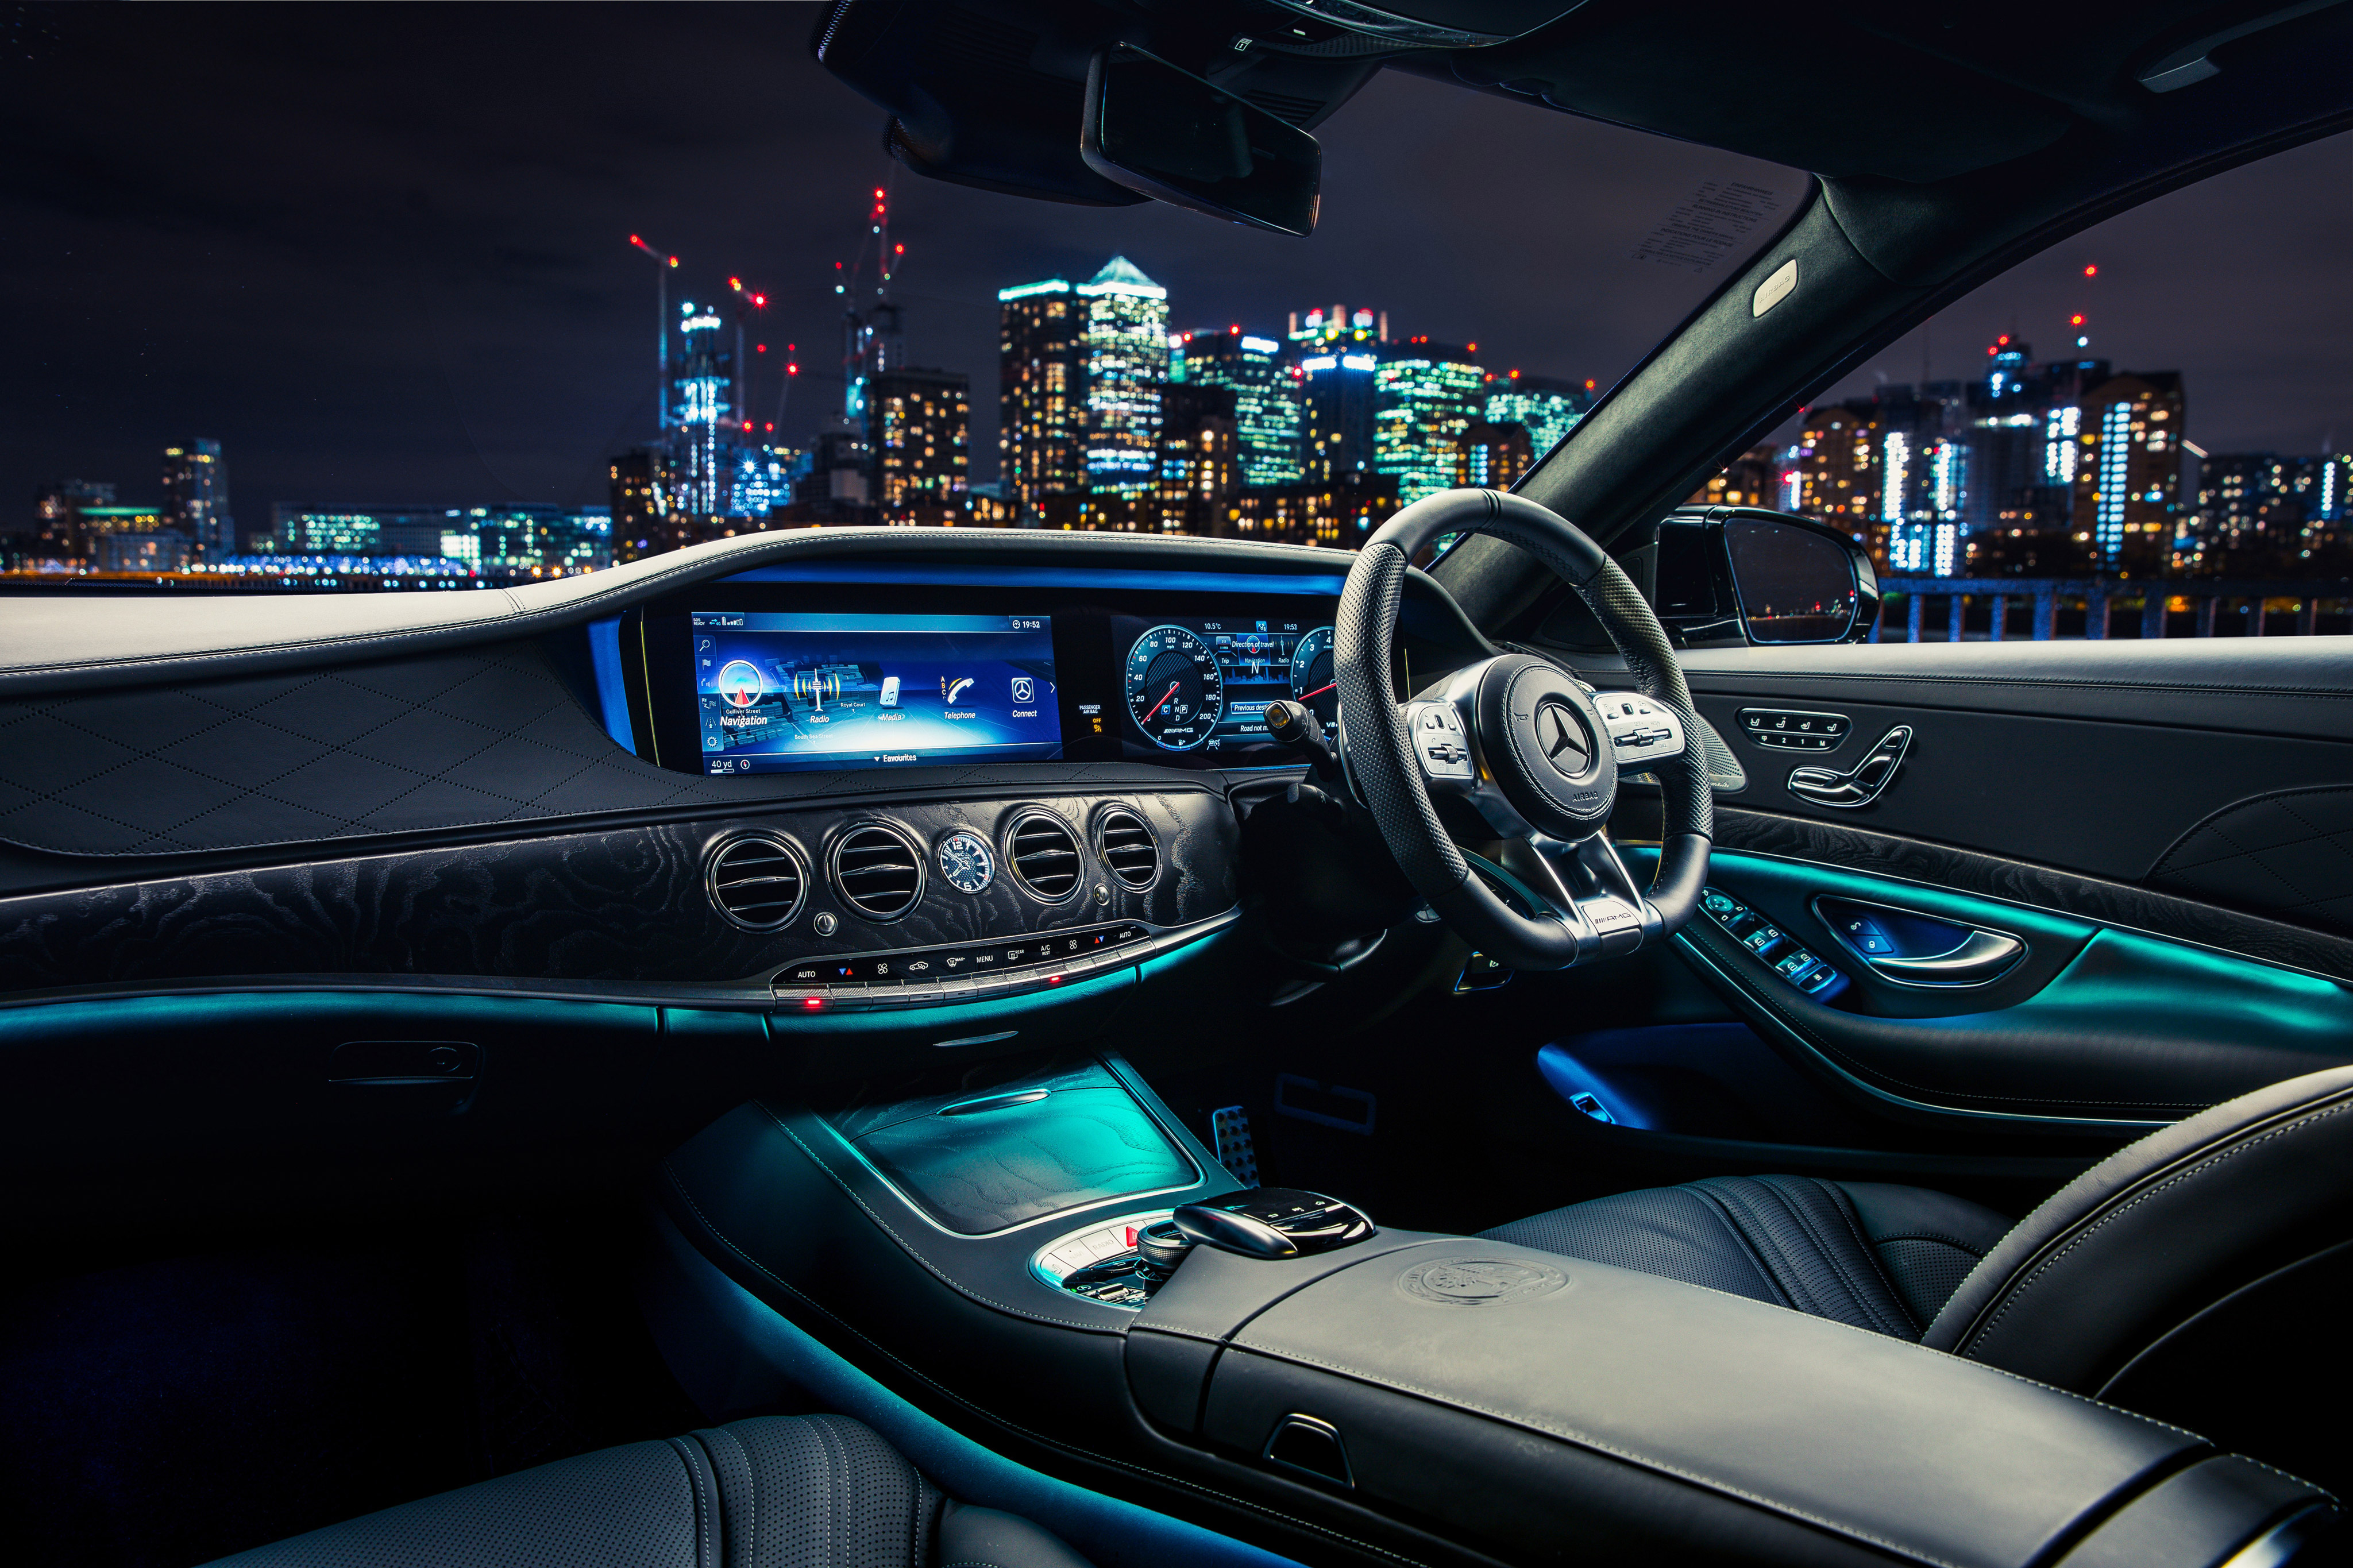 2560x1024 Mercedes Amg S 63 4matic Interior 2560x1024